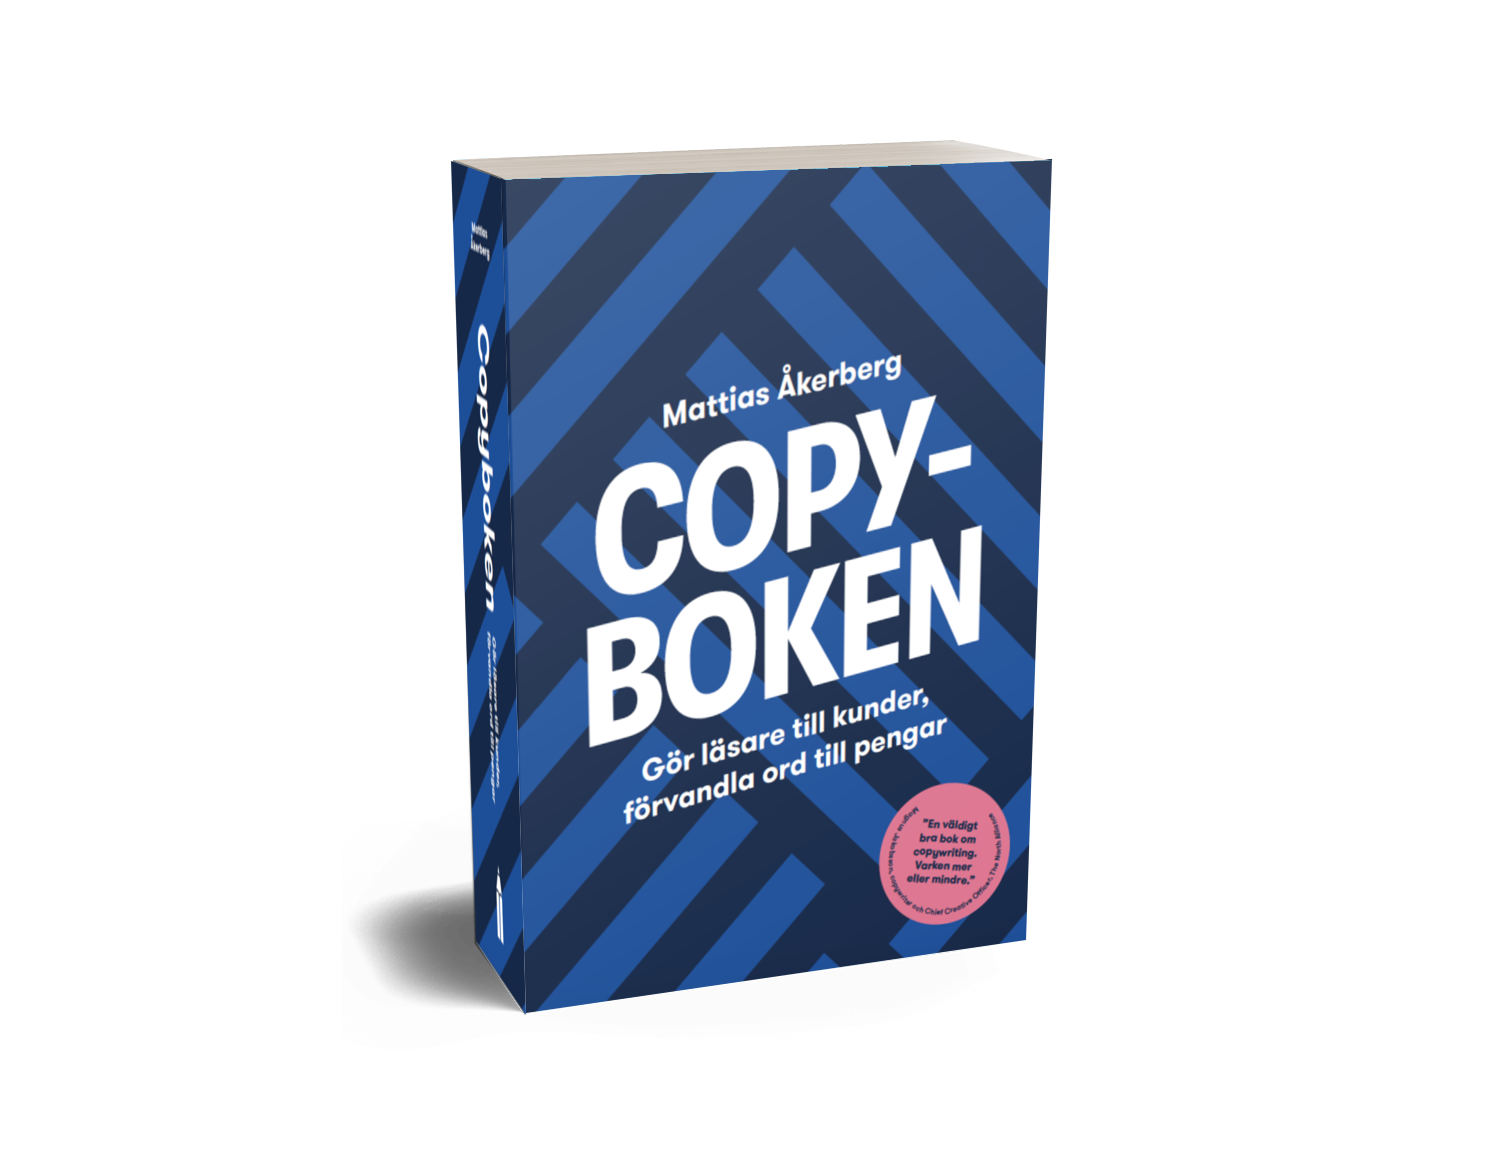 Copyboken - bok om copywriting Mattias Åkerberg Please copy me